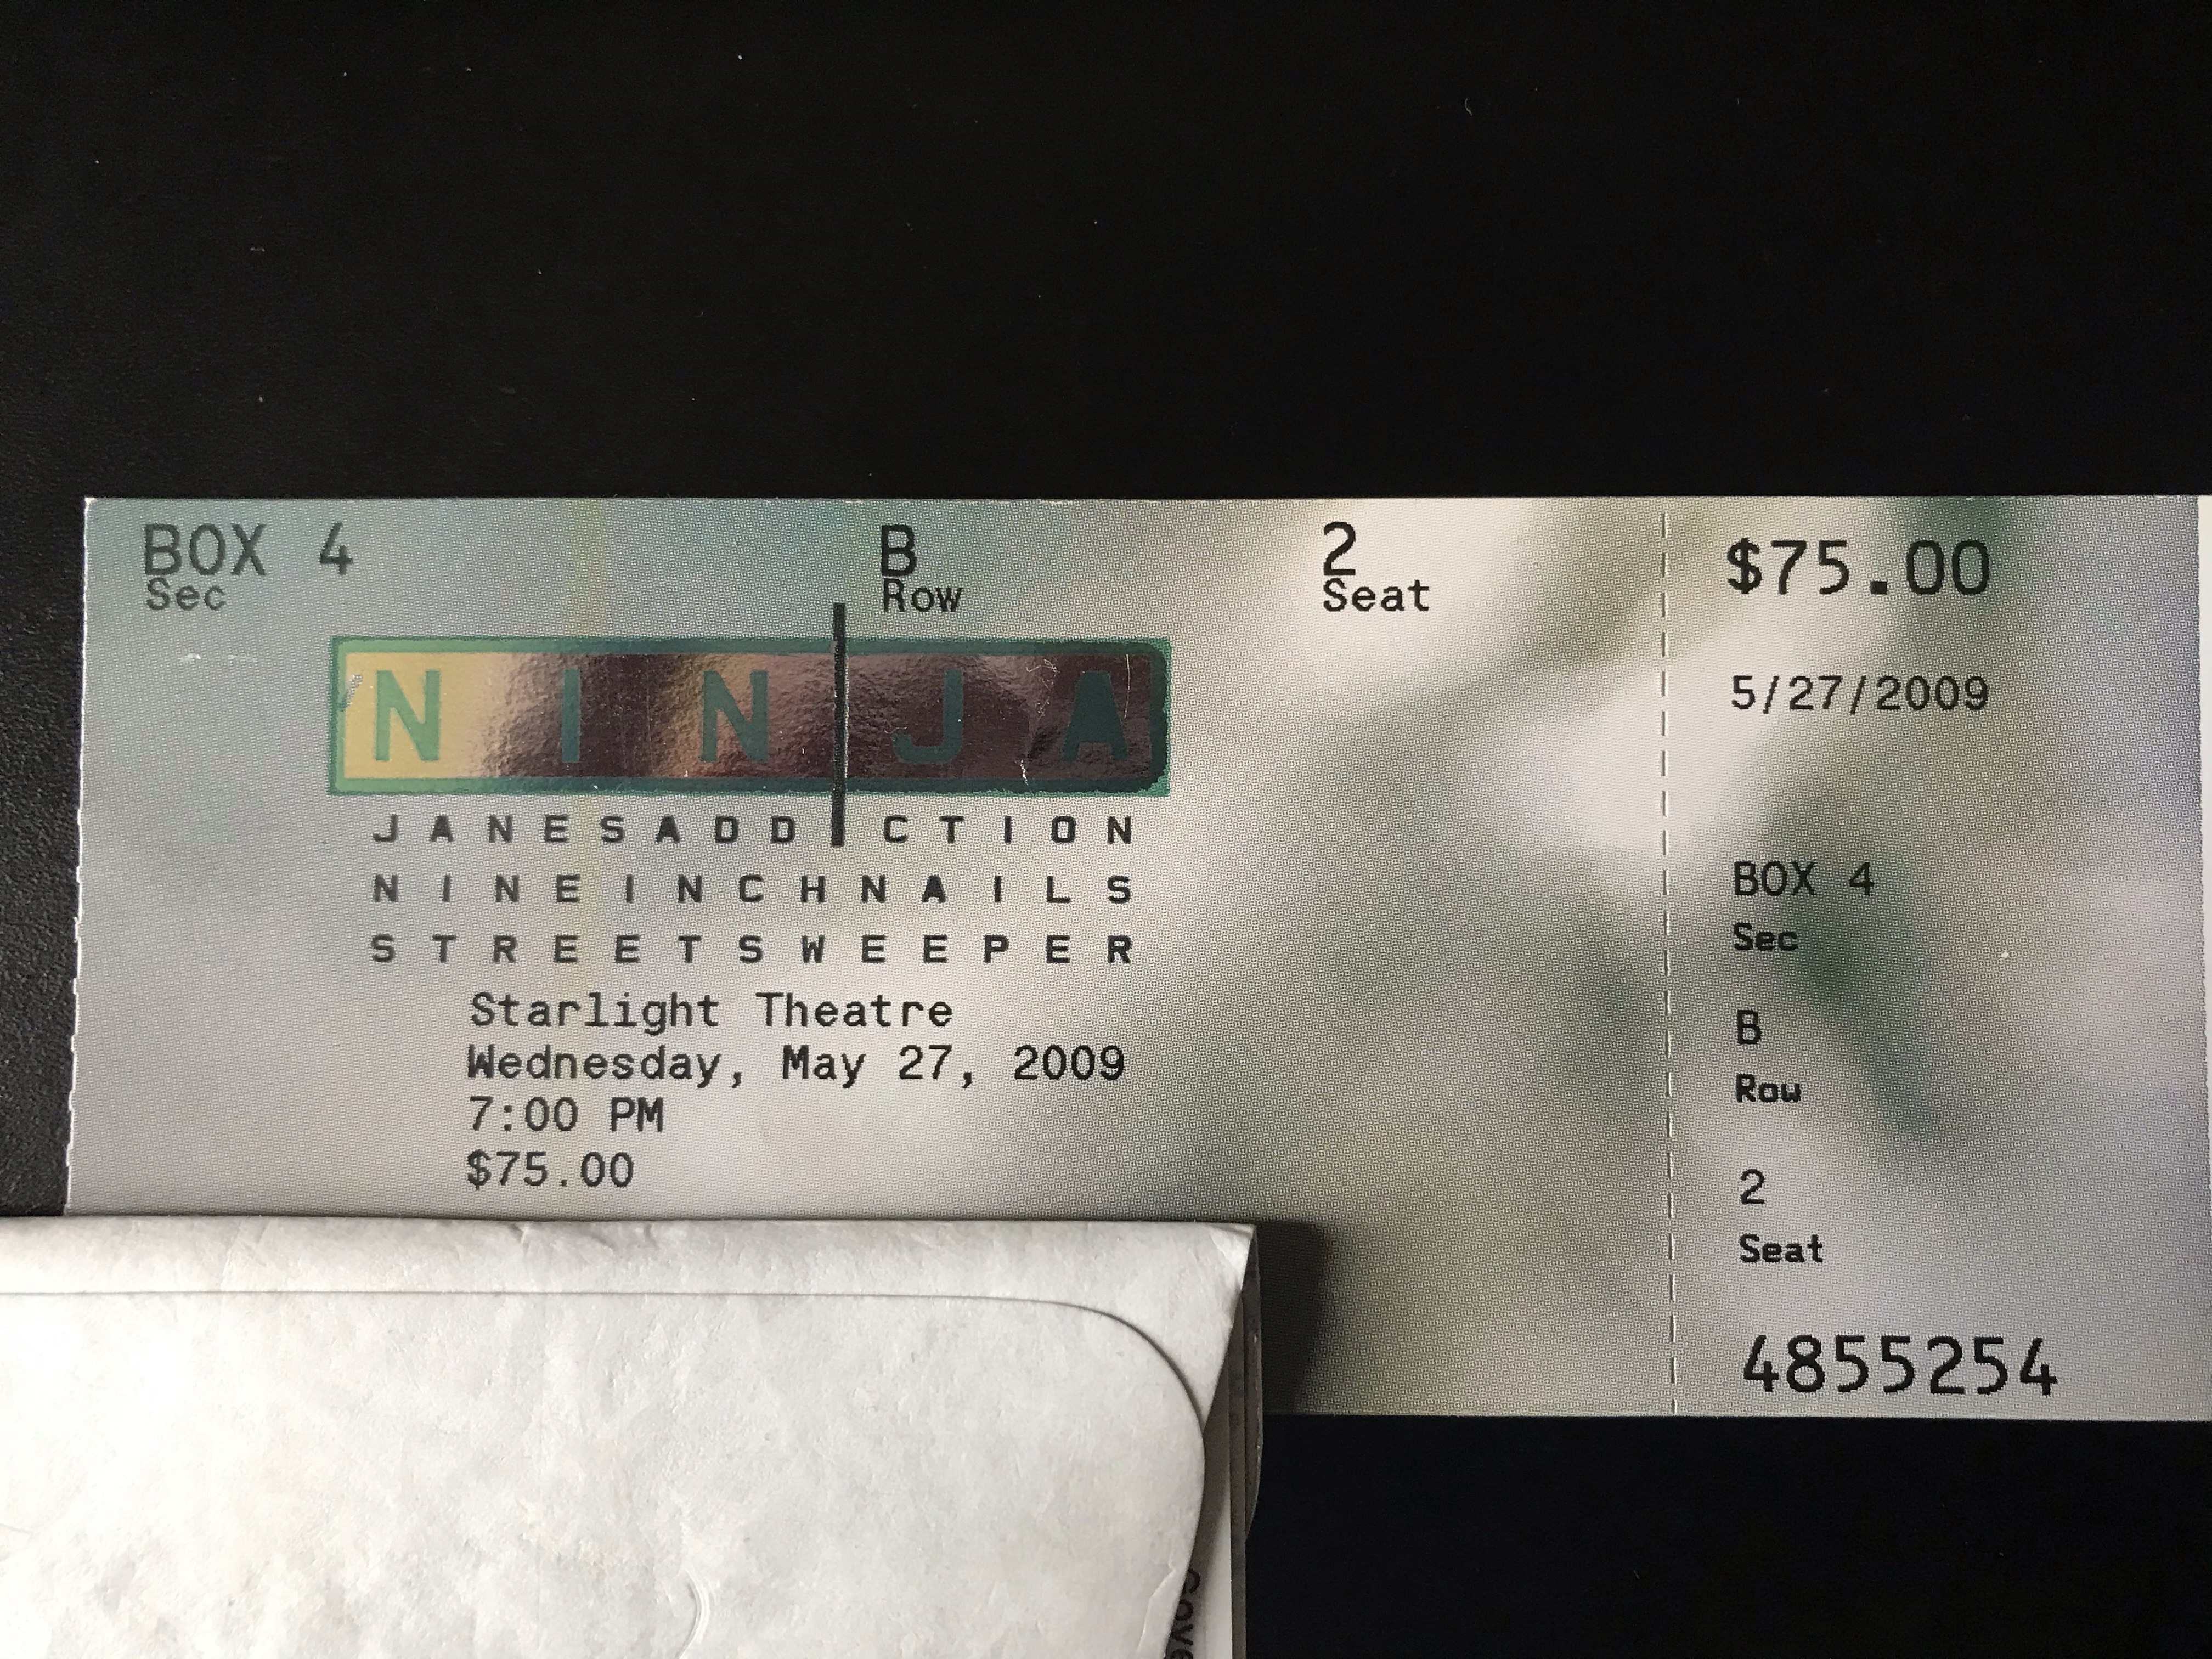 2009/05/27 Ticket